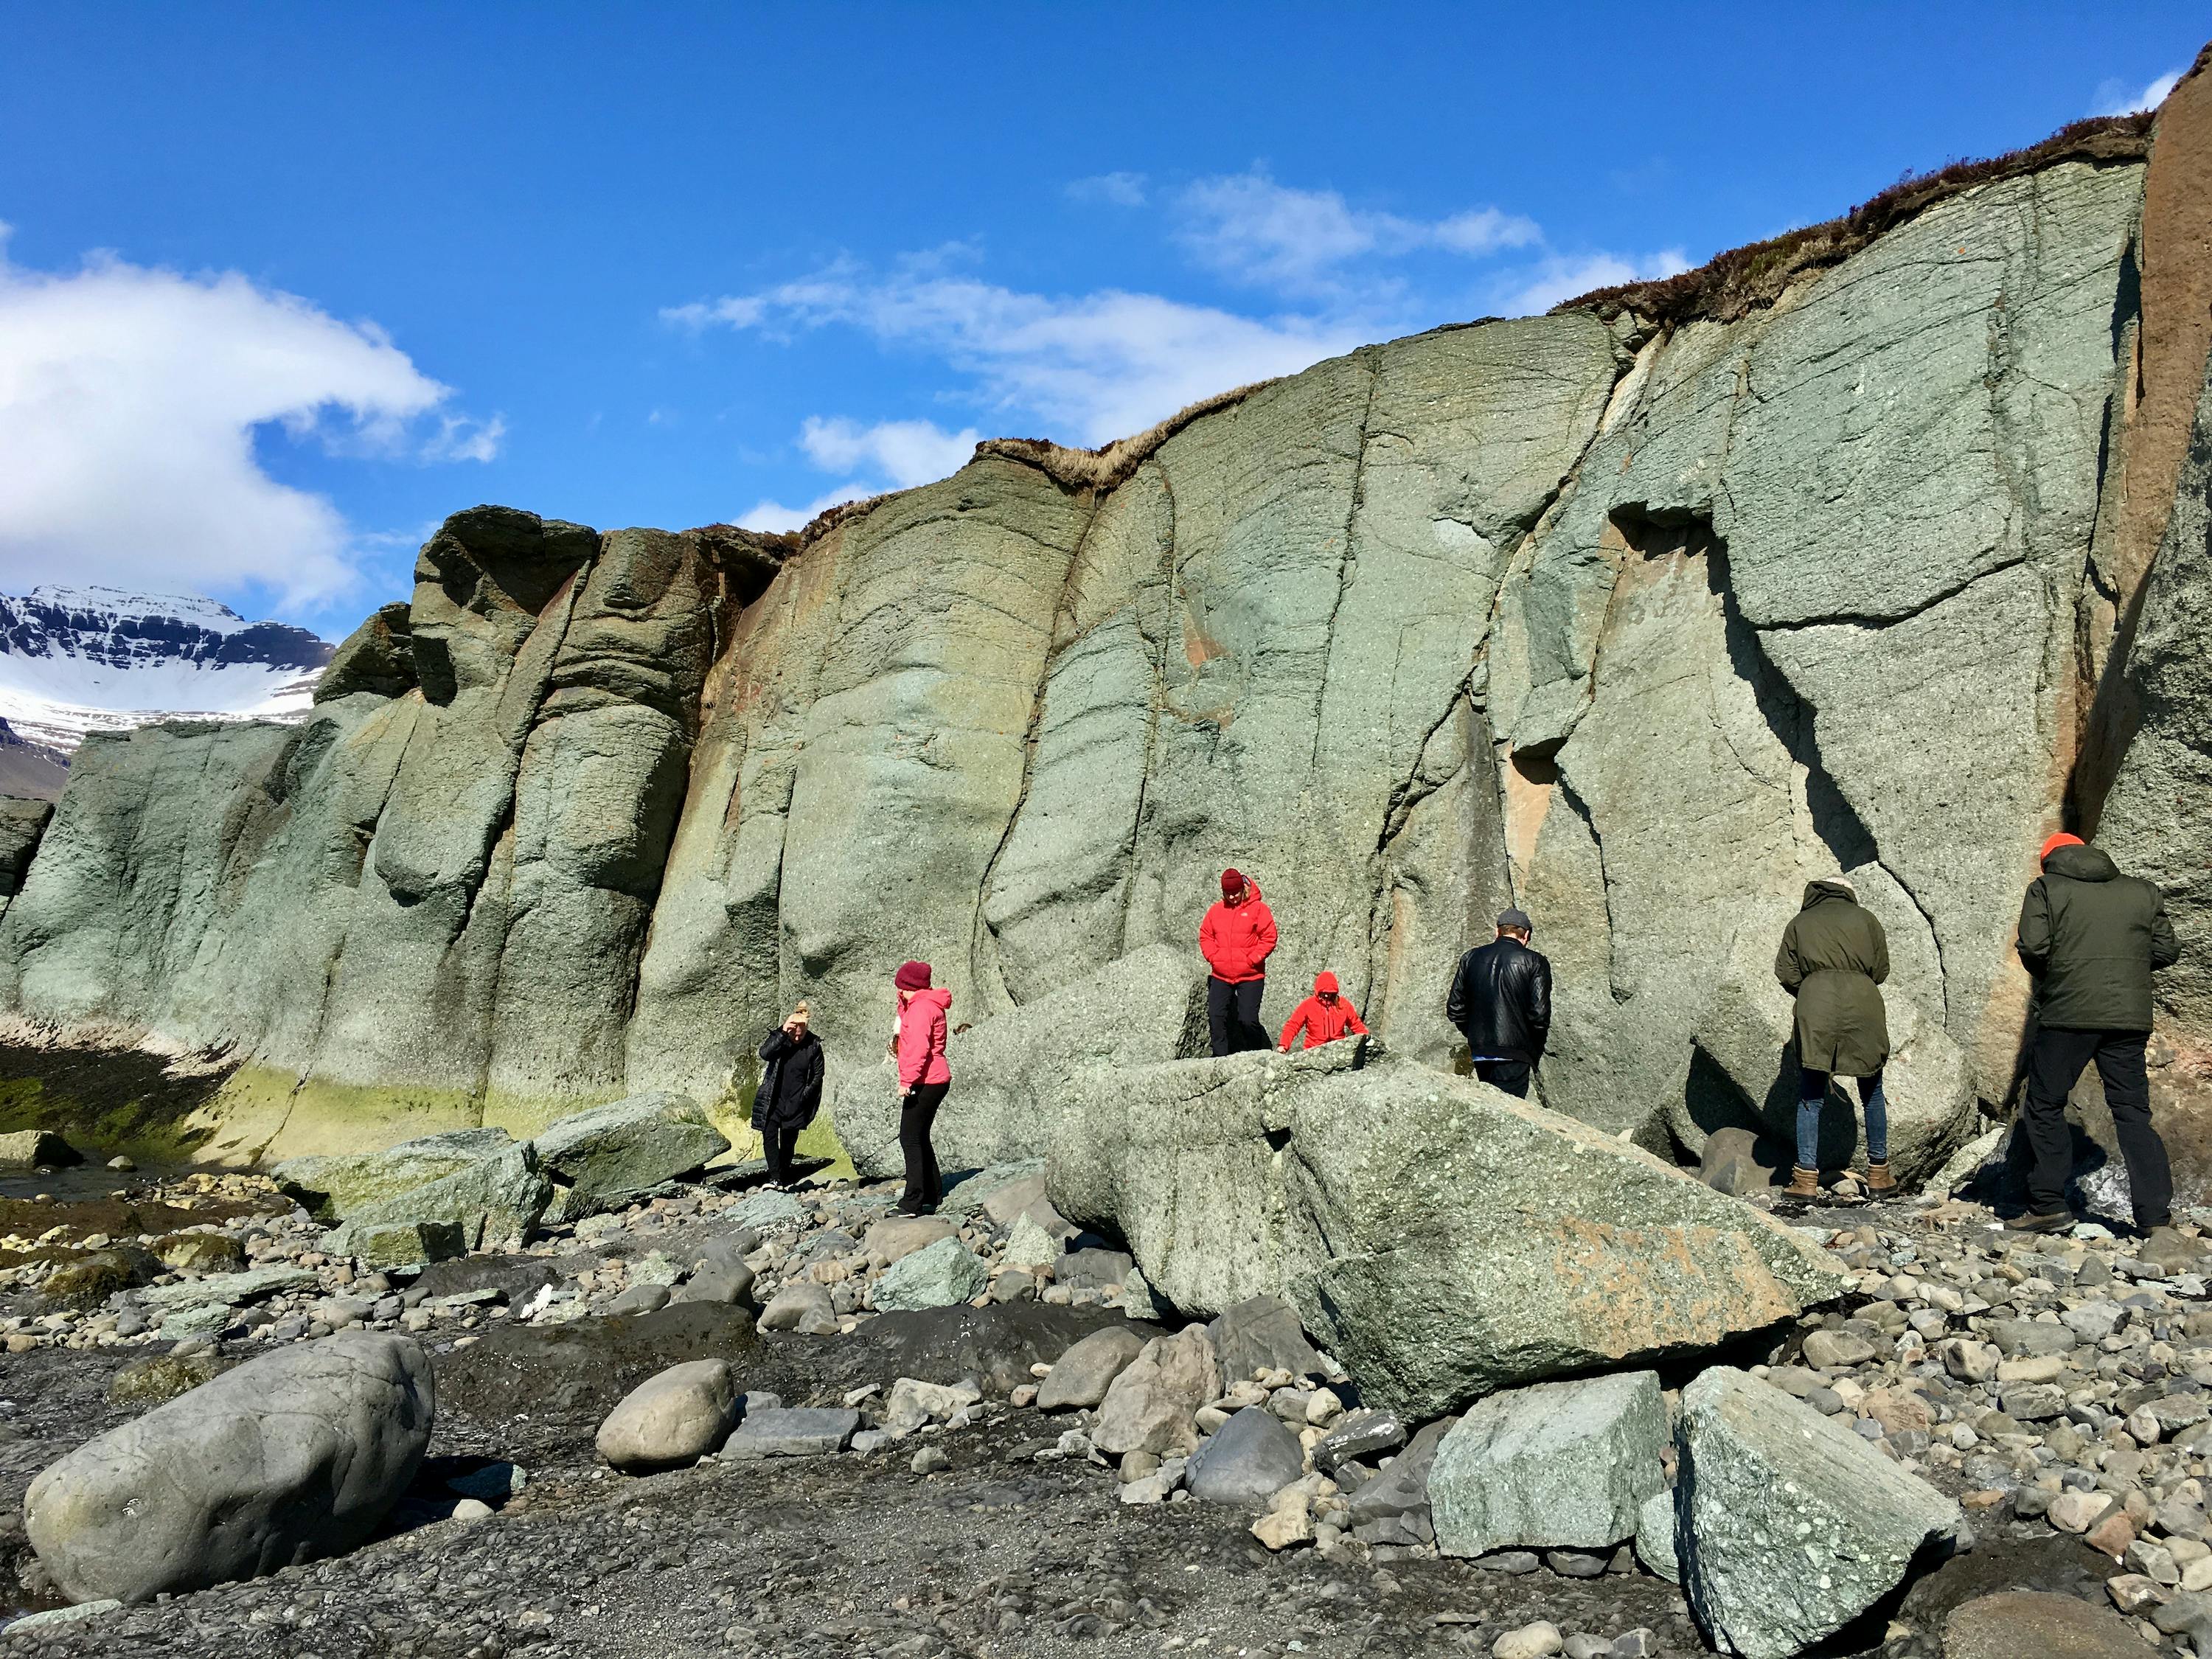 A few people exploring a blue cliff